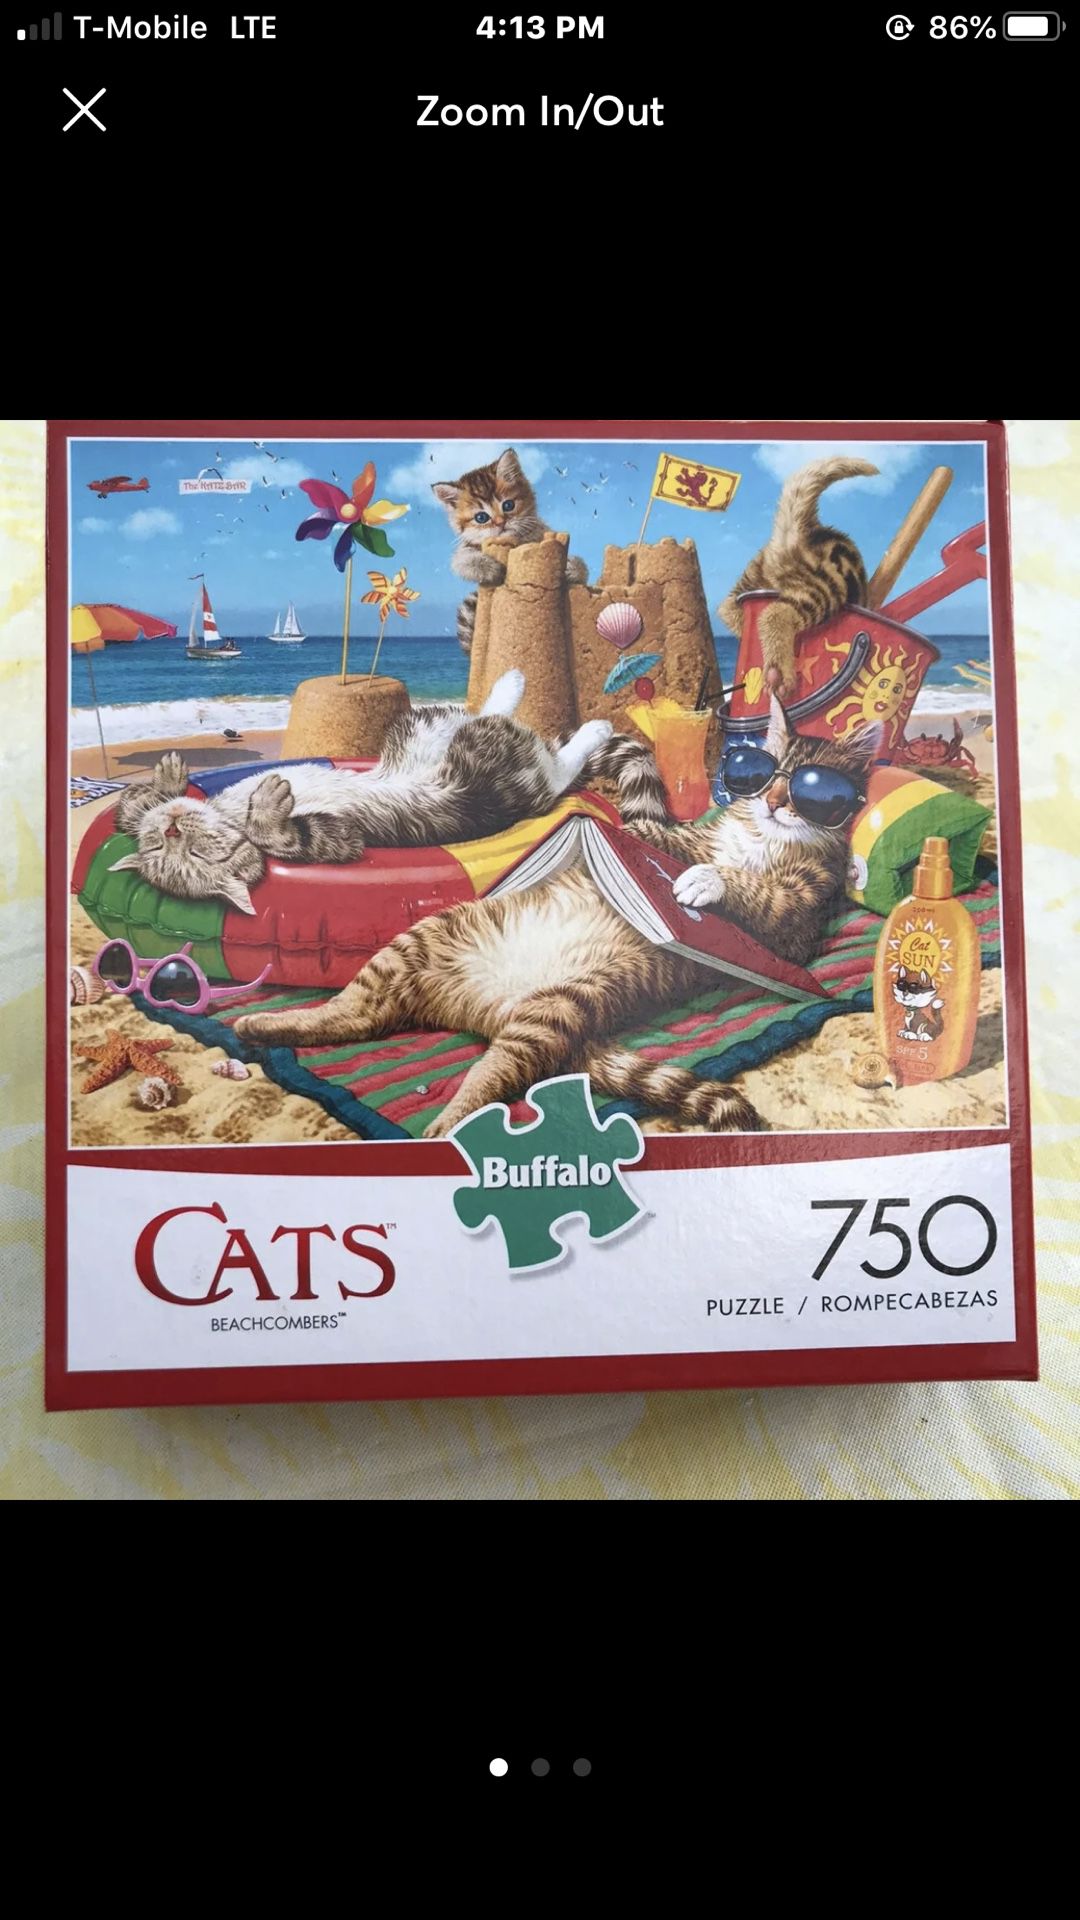 NEW!!! 750 Piece Puzzle “BEACHCOMBERS” CATS